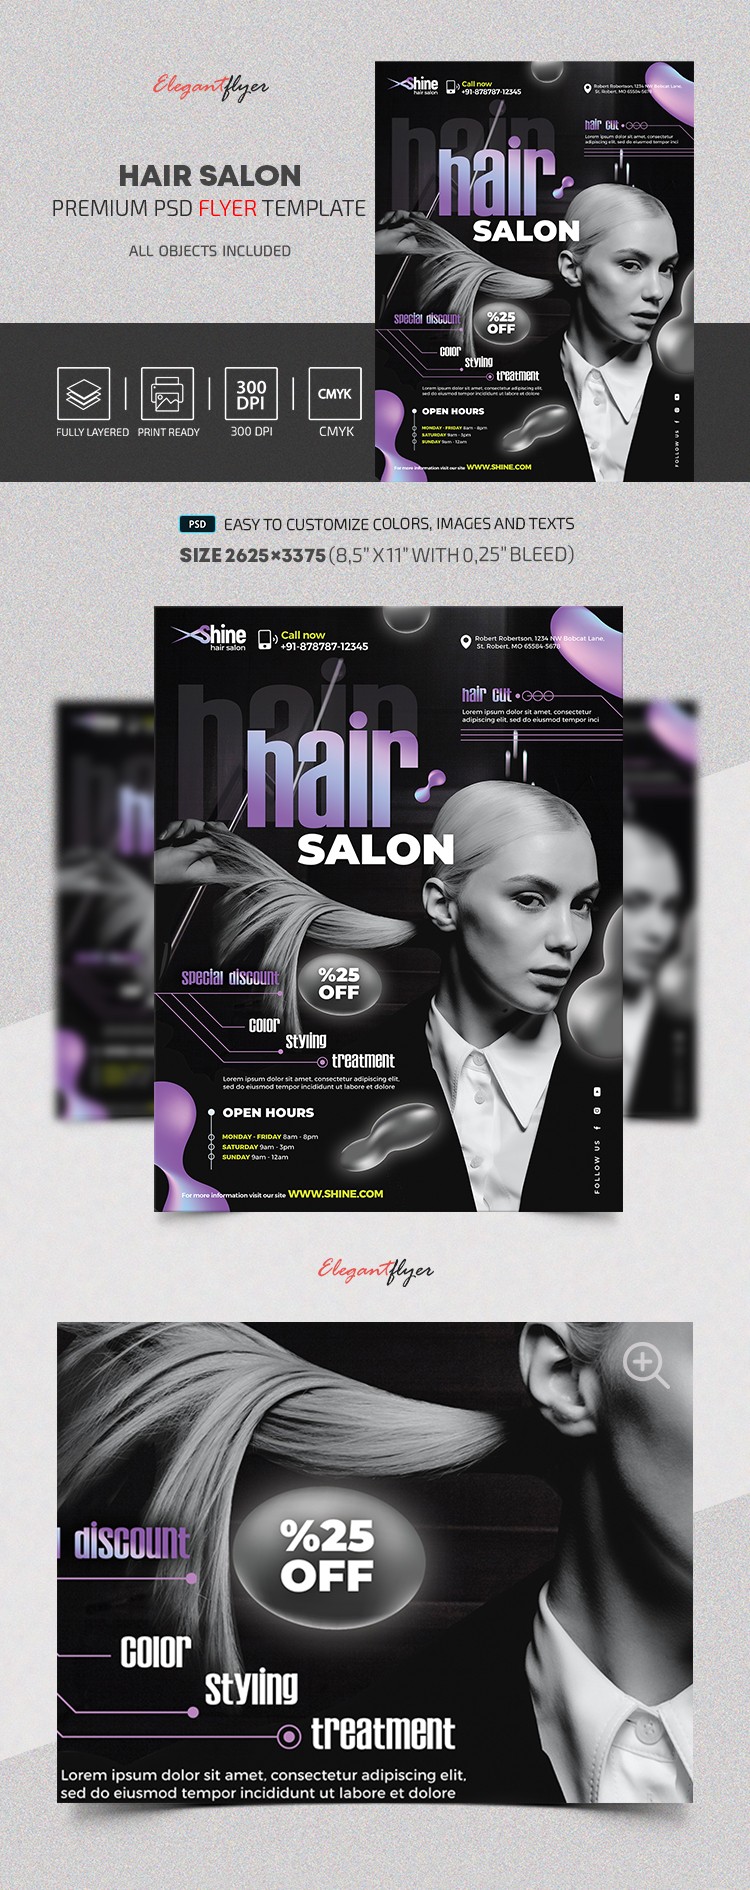 Hair Salon by ElegantFlyer